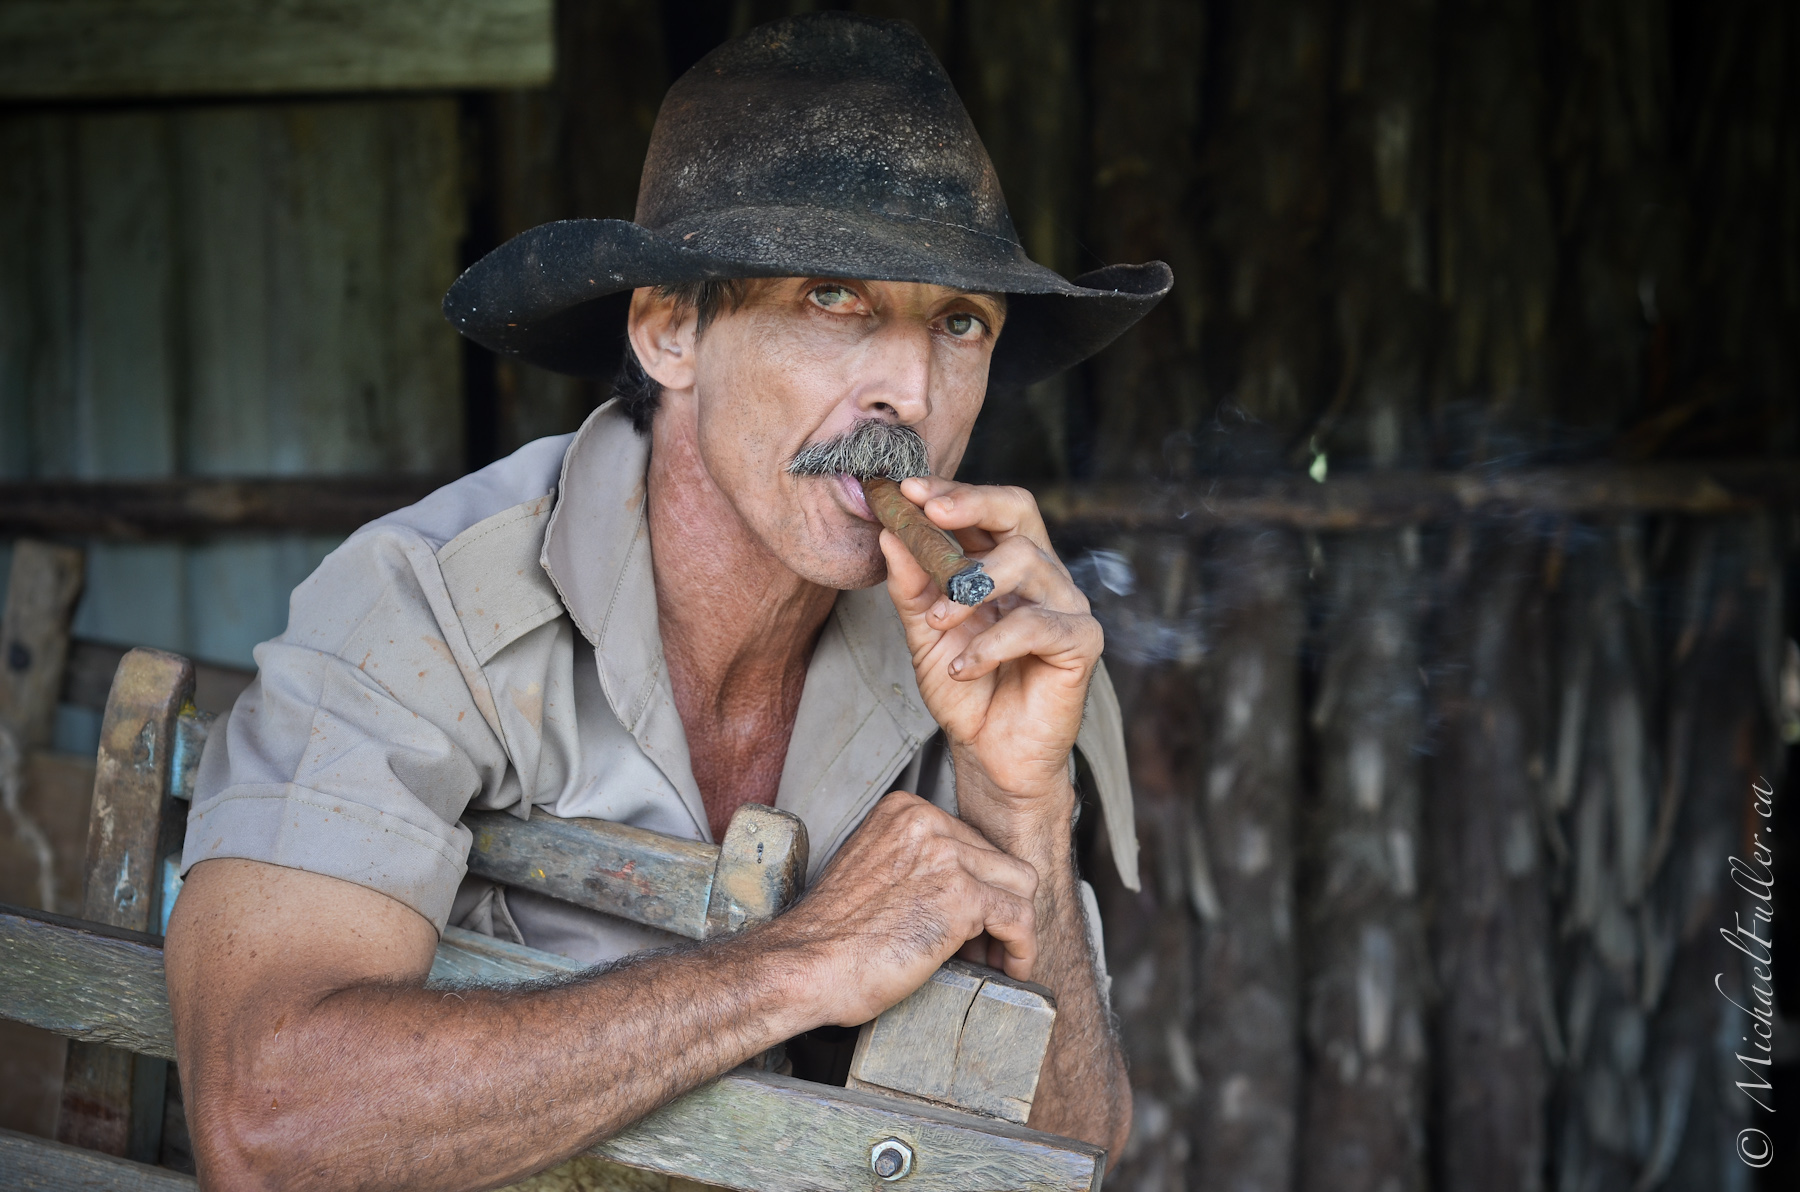 The Viñales Tobacco Man